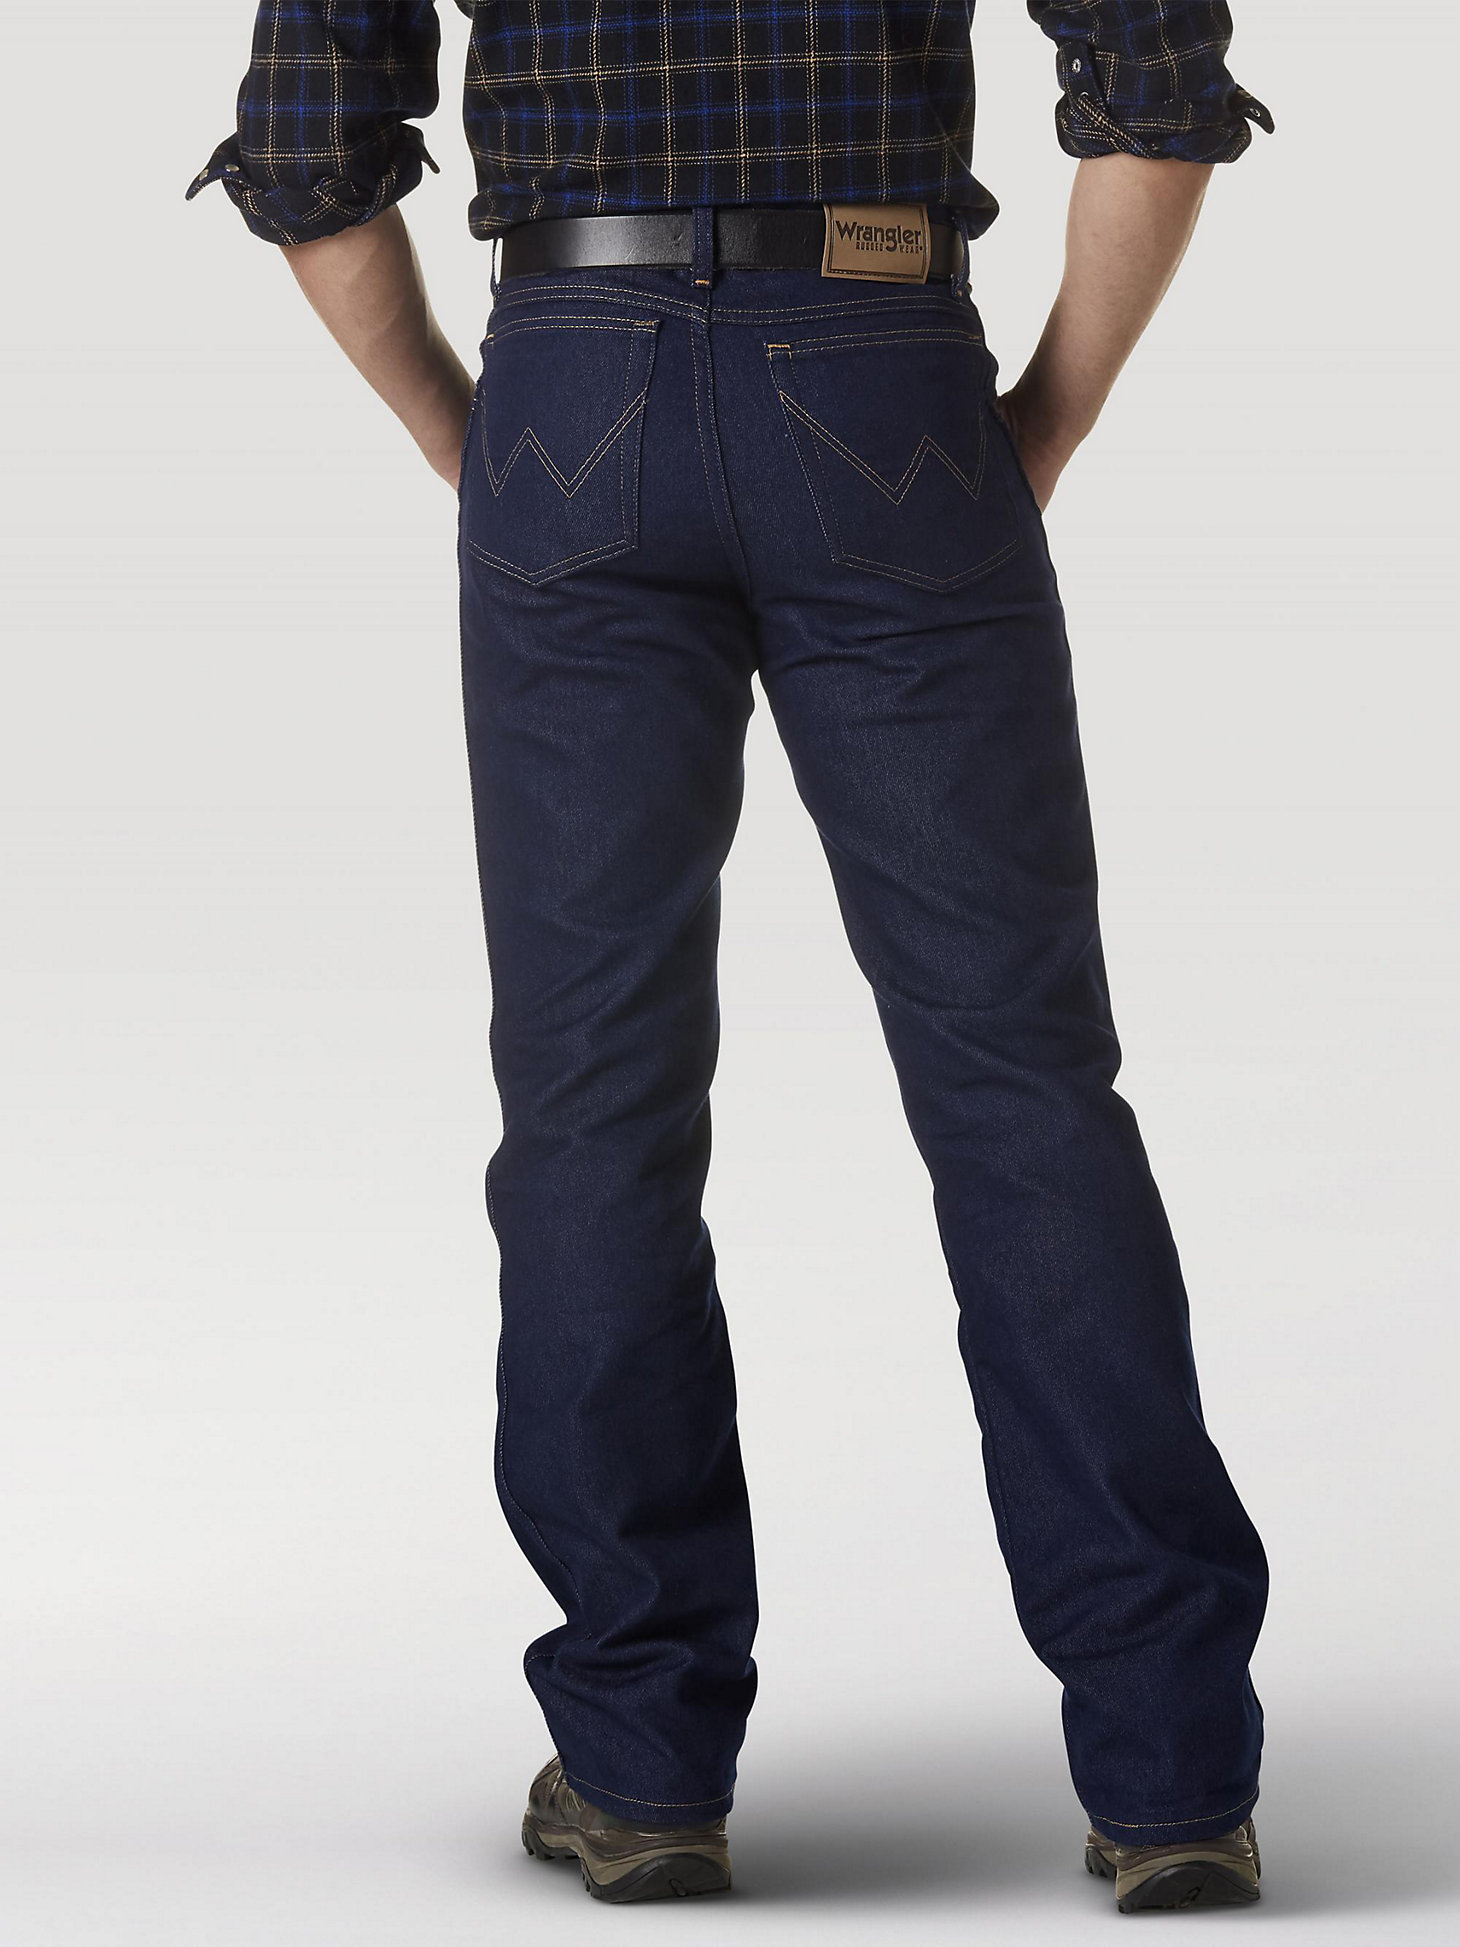 Wrangler Rugged Wear® Stretch Regular Fit Jean in Denim alternative view 2